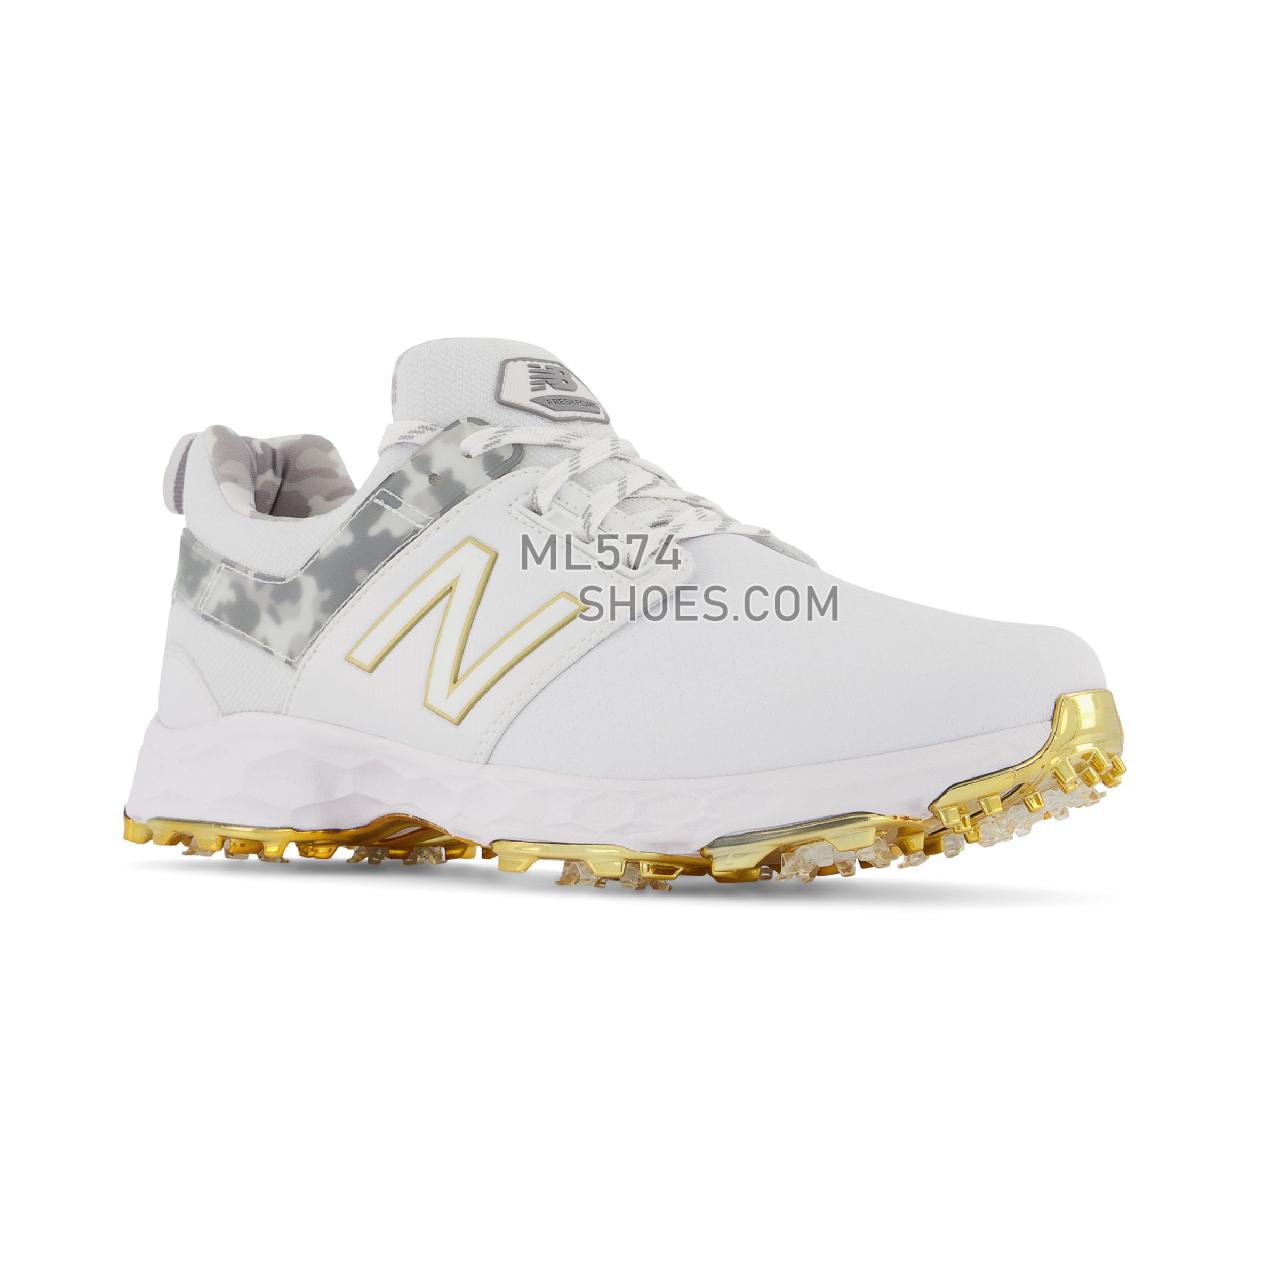 New Balance Fresh Foam LinksPro - Men's Golf - White with Gold - NBG4001WG